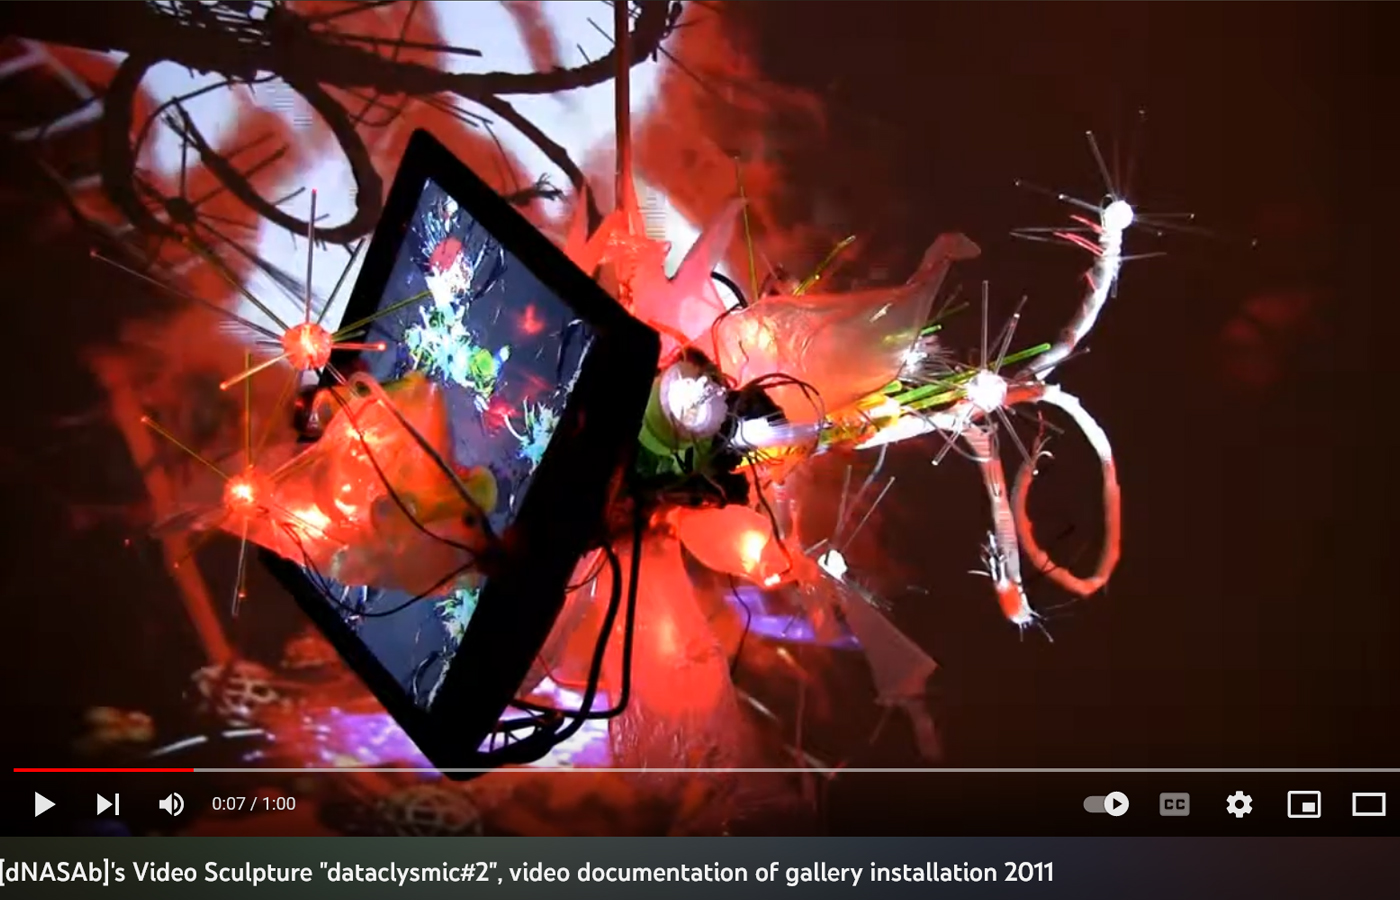 [dNASAb]'s Video Sculpture "dataclysmic#2", video documentation of gallery installation 2011